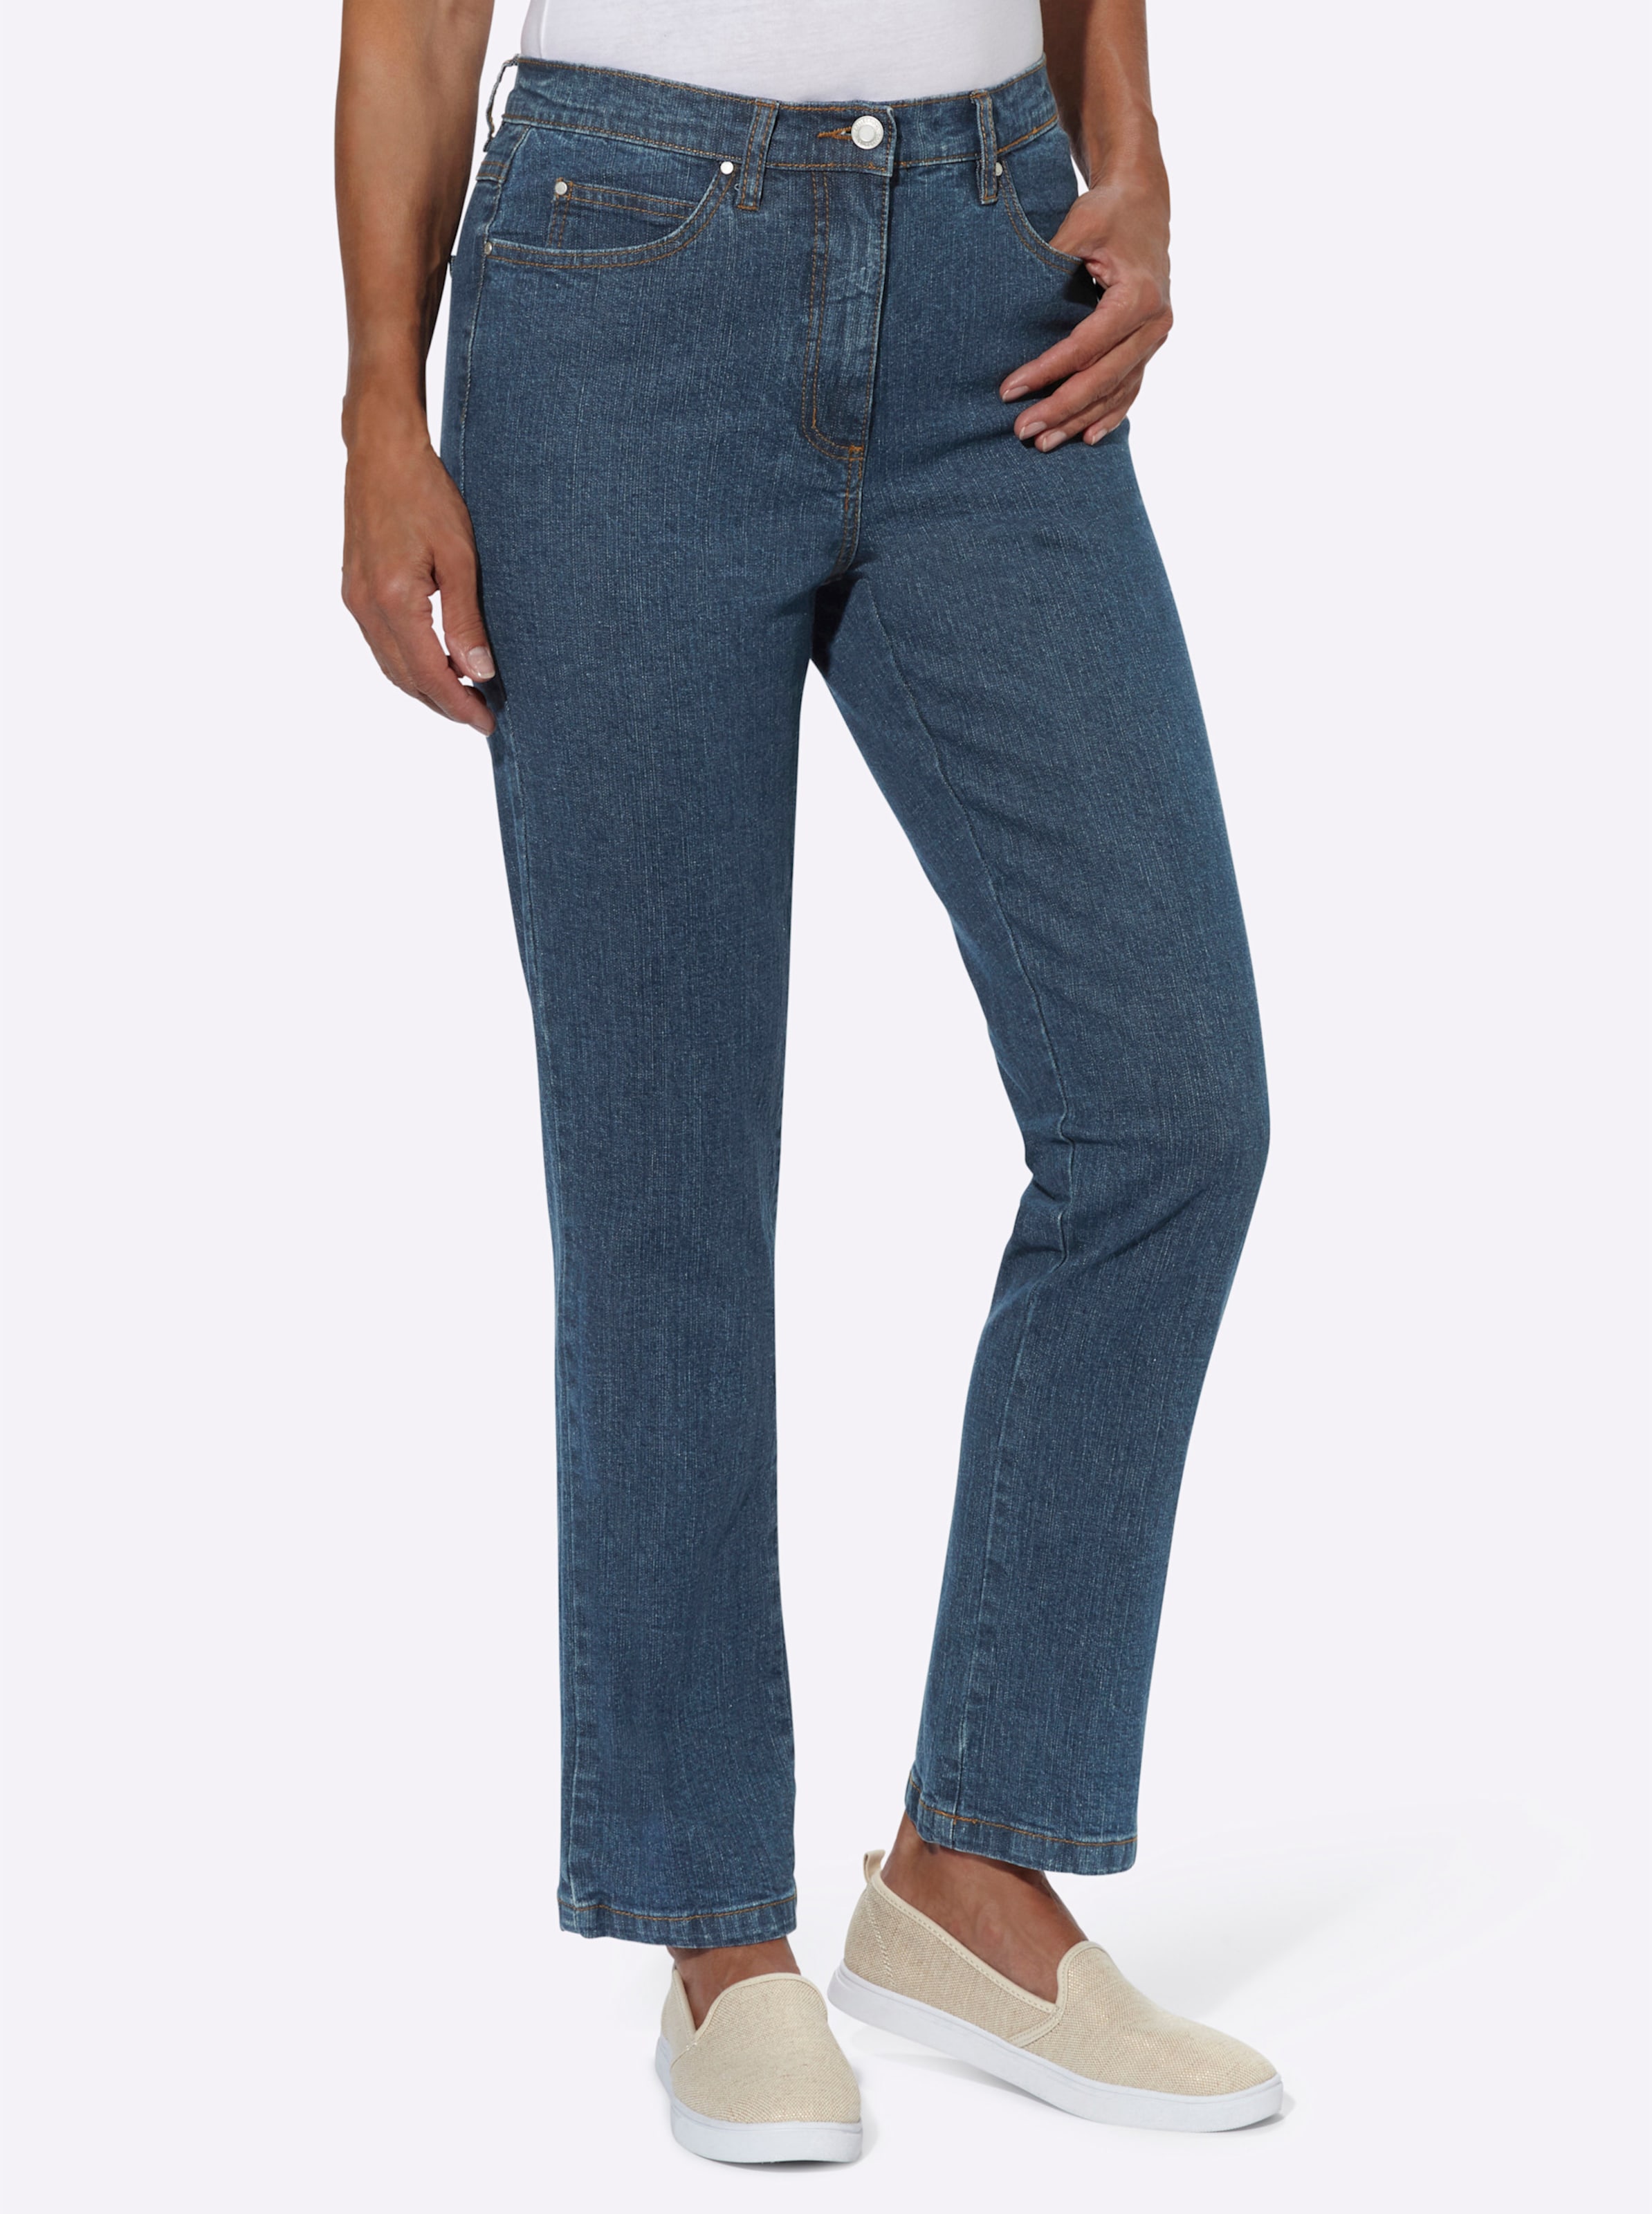 Witt Damen 5-Pocket-Jeans, blue-stone-washed